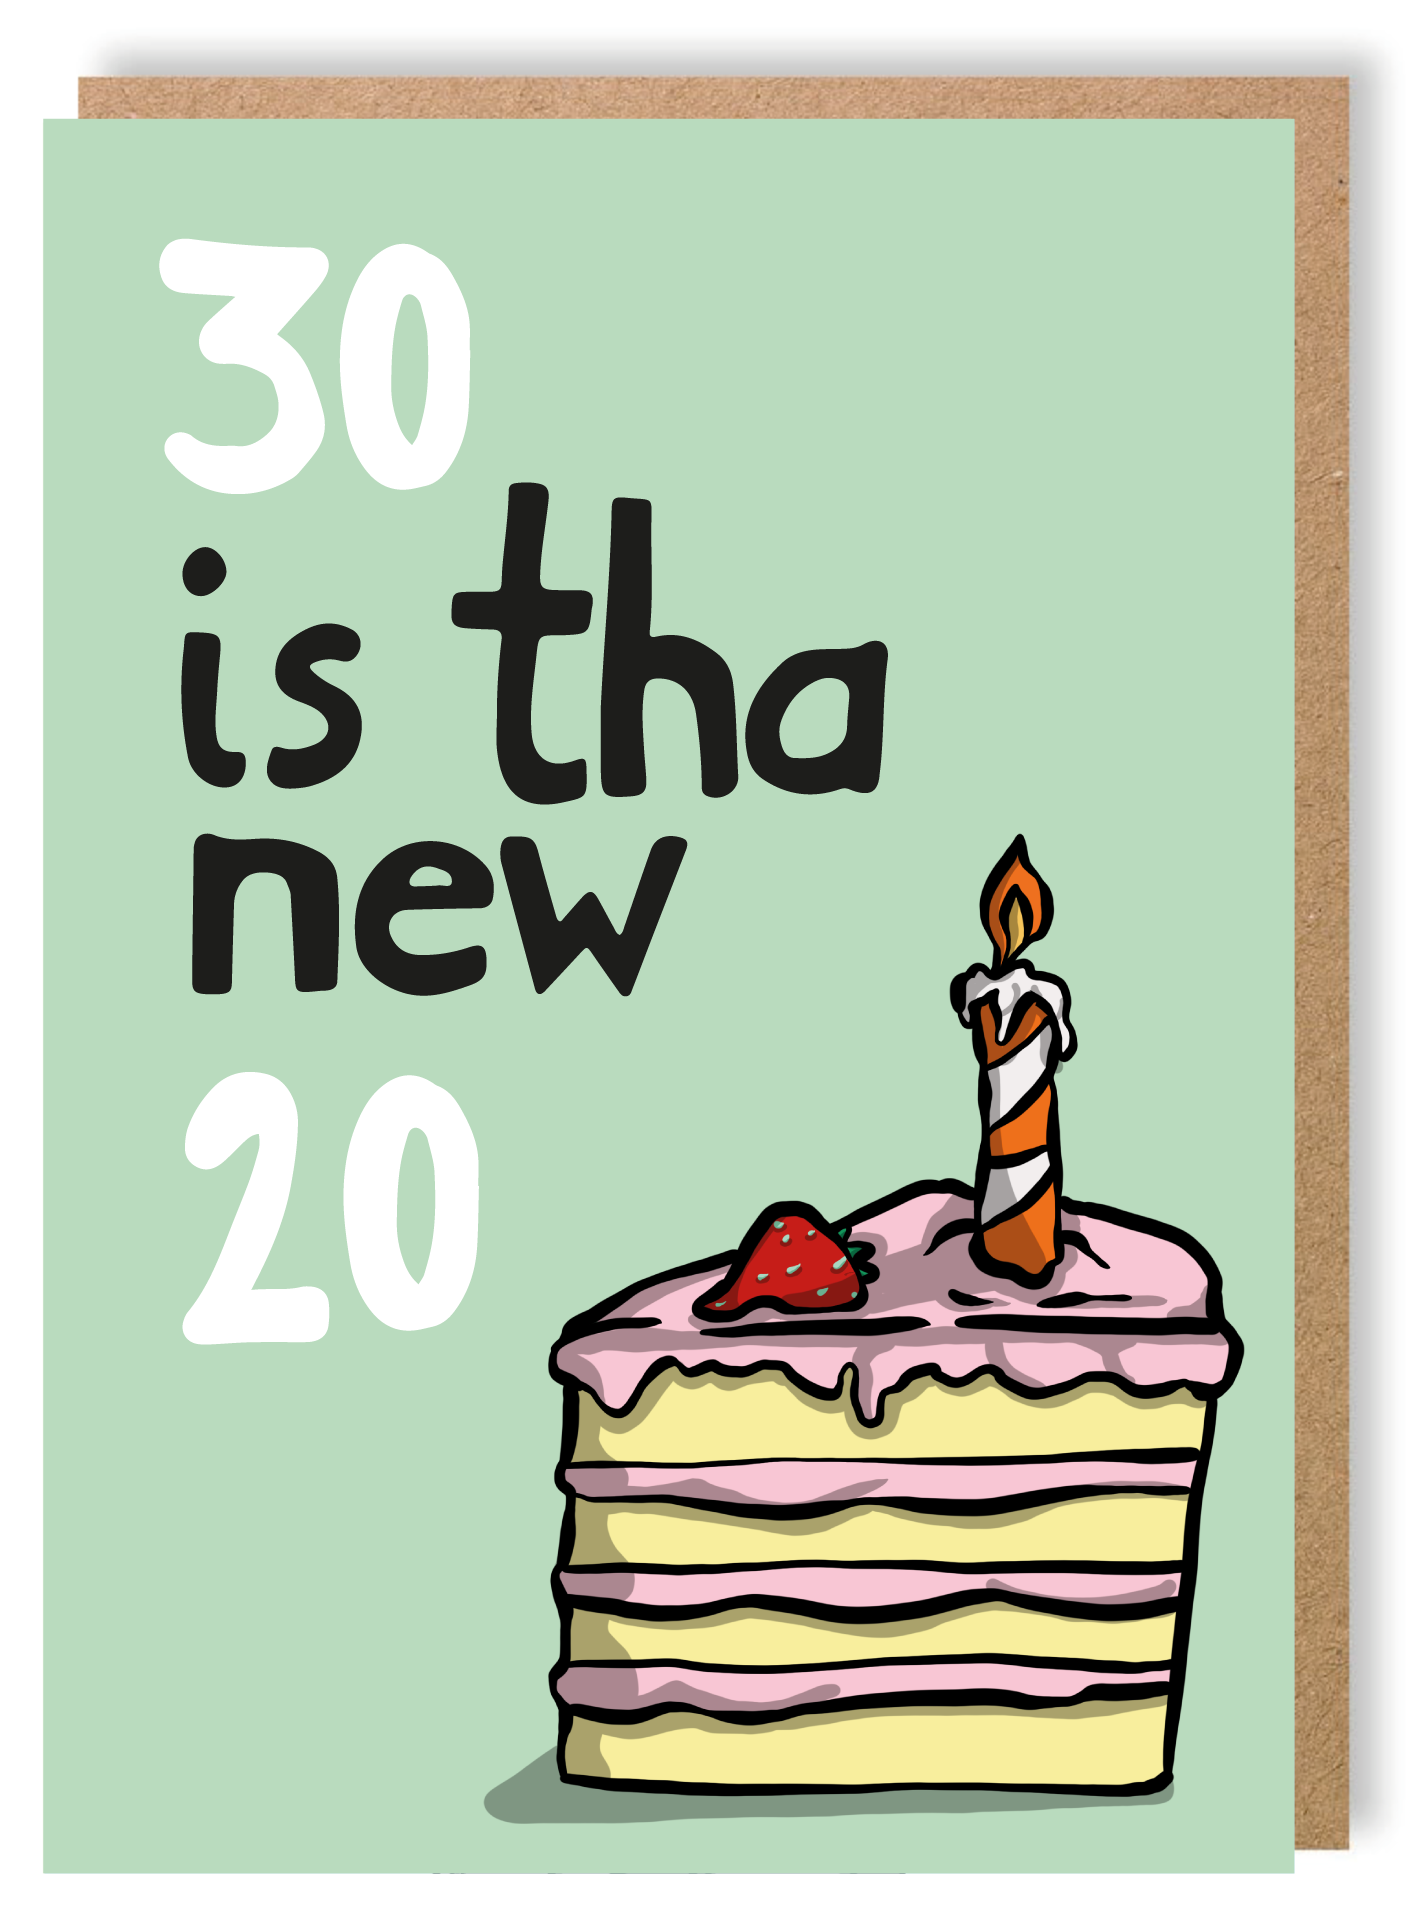 30 is tha new 20 - Greetings Card - LukeHorton Art